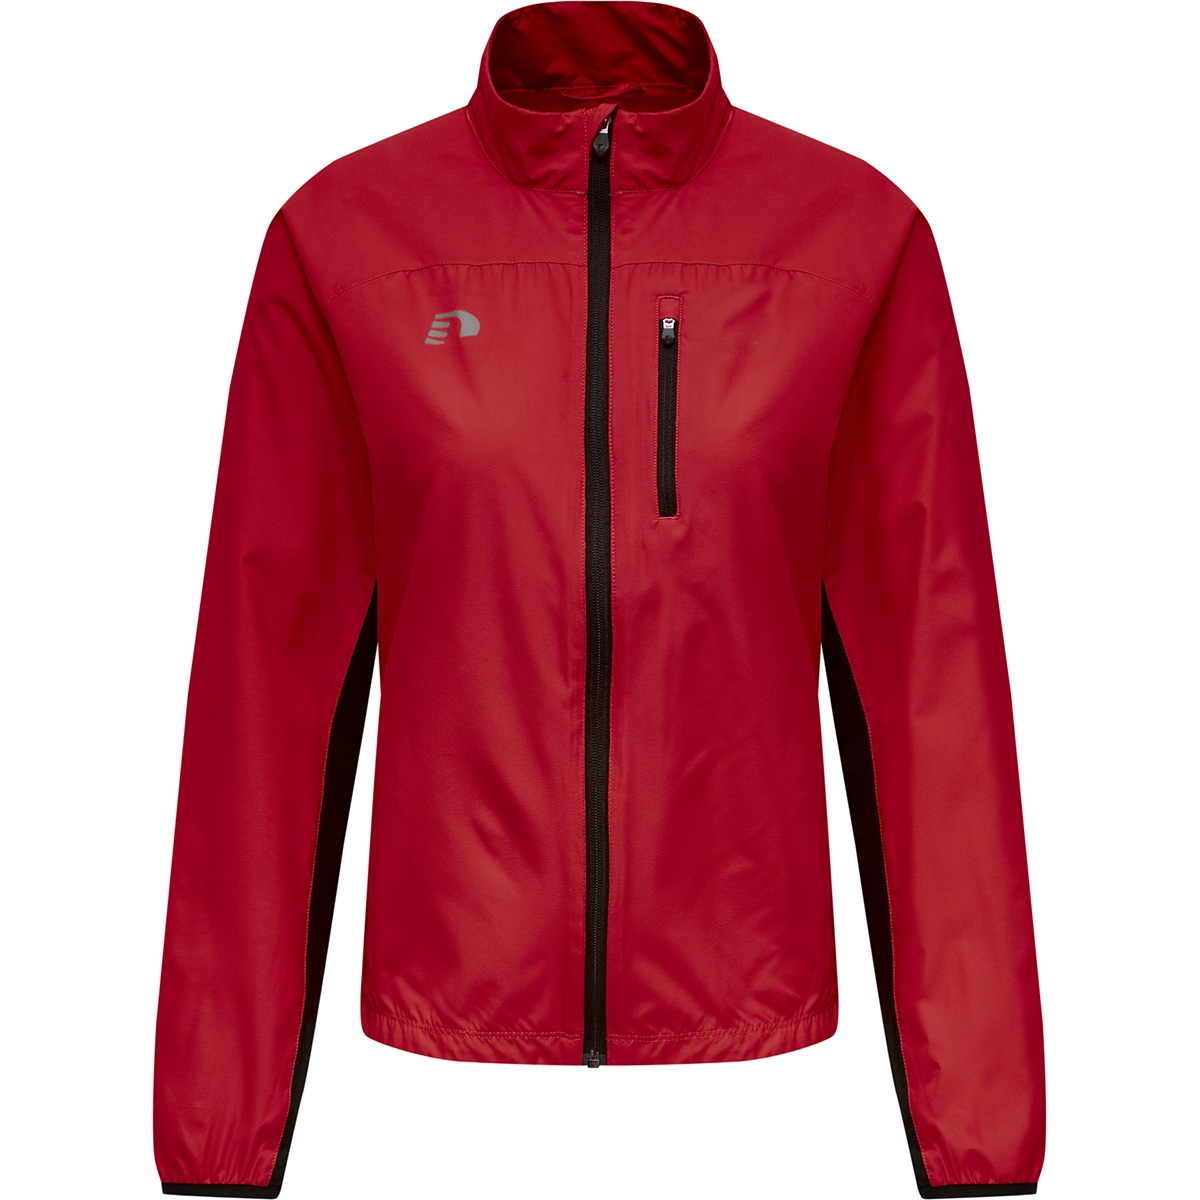 Productfoto van Newline Core Jacket Women - tango red